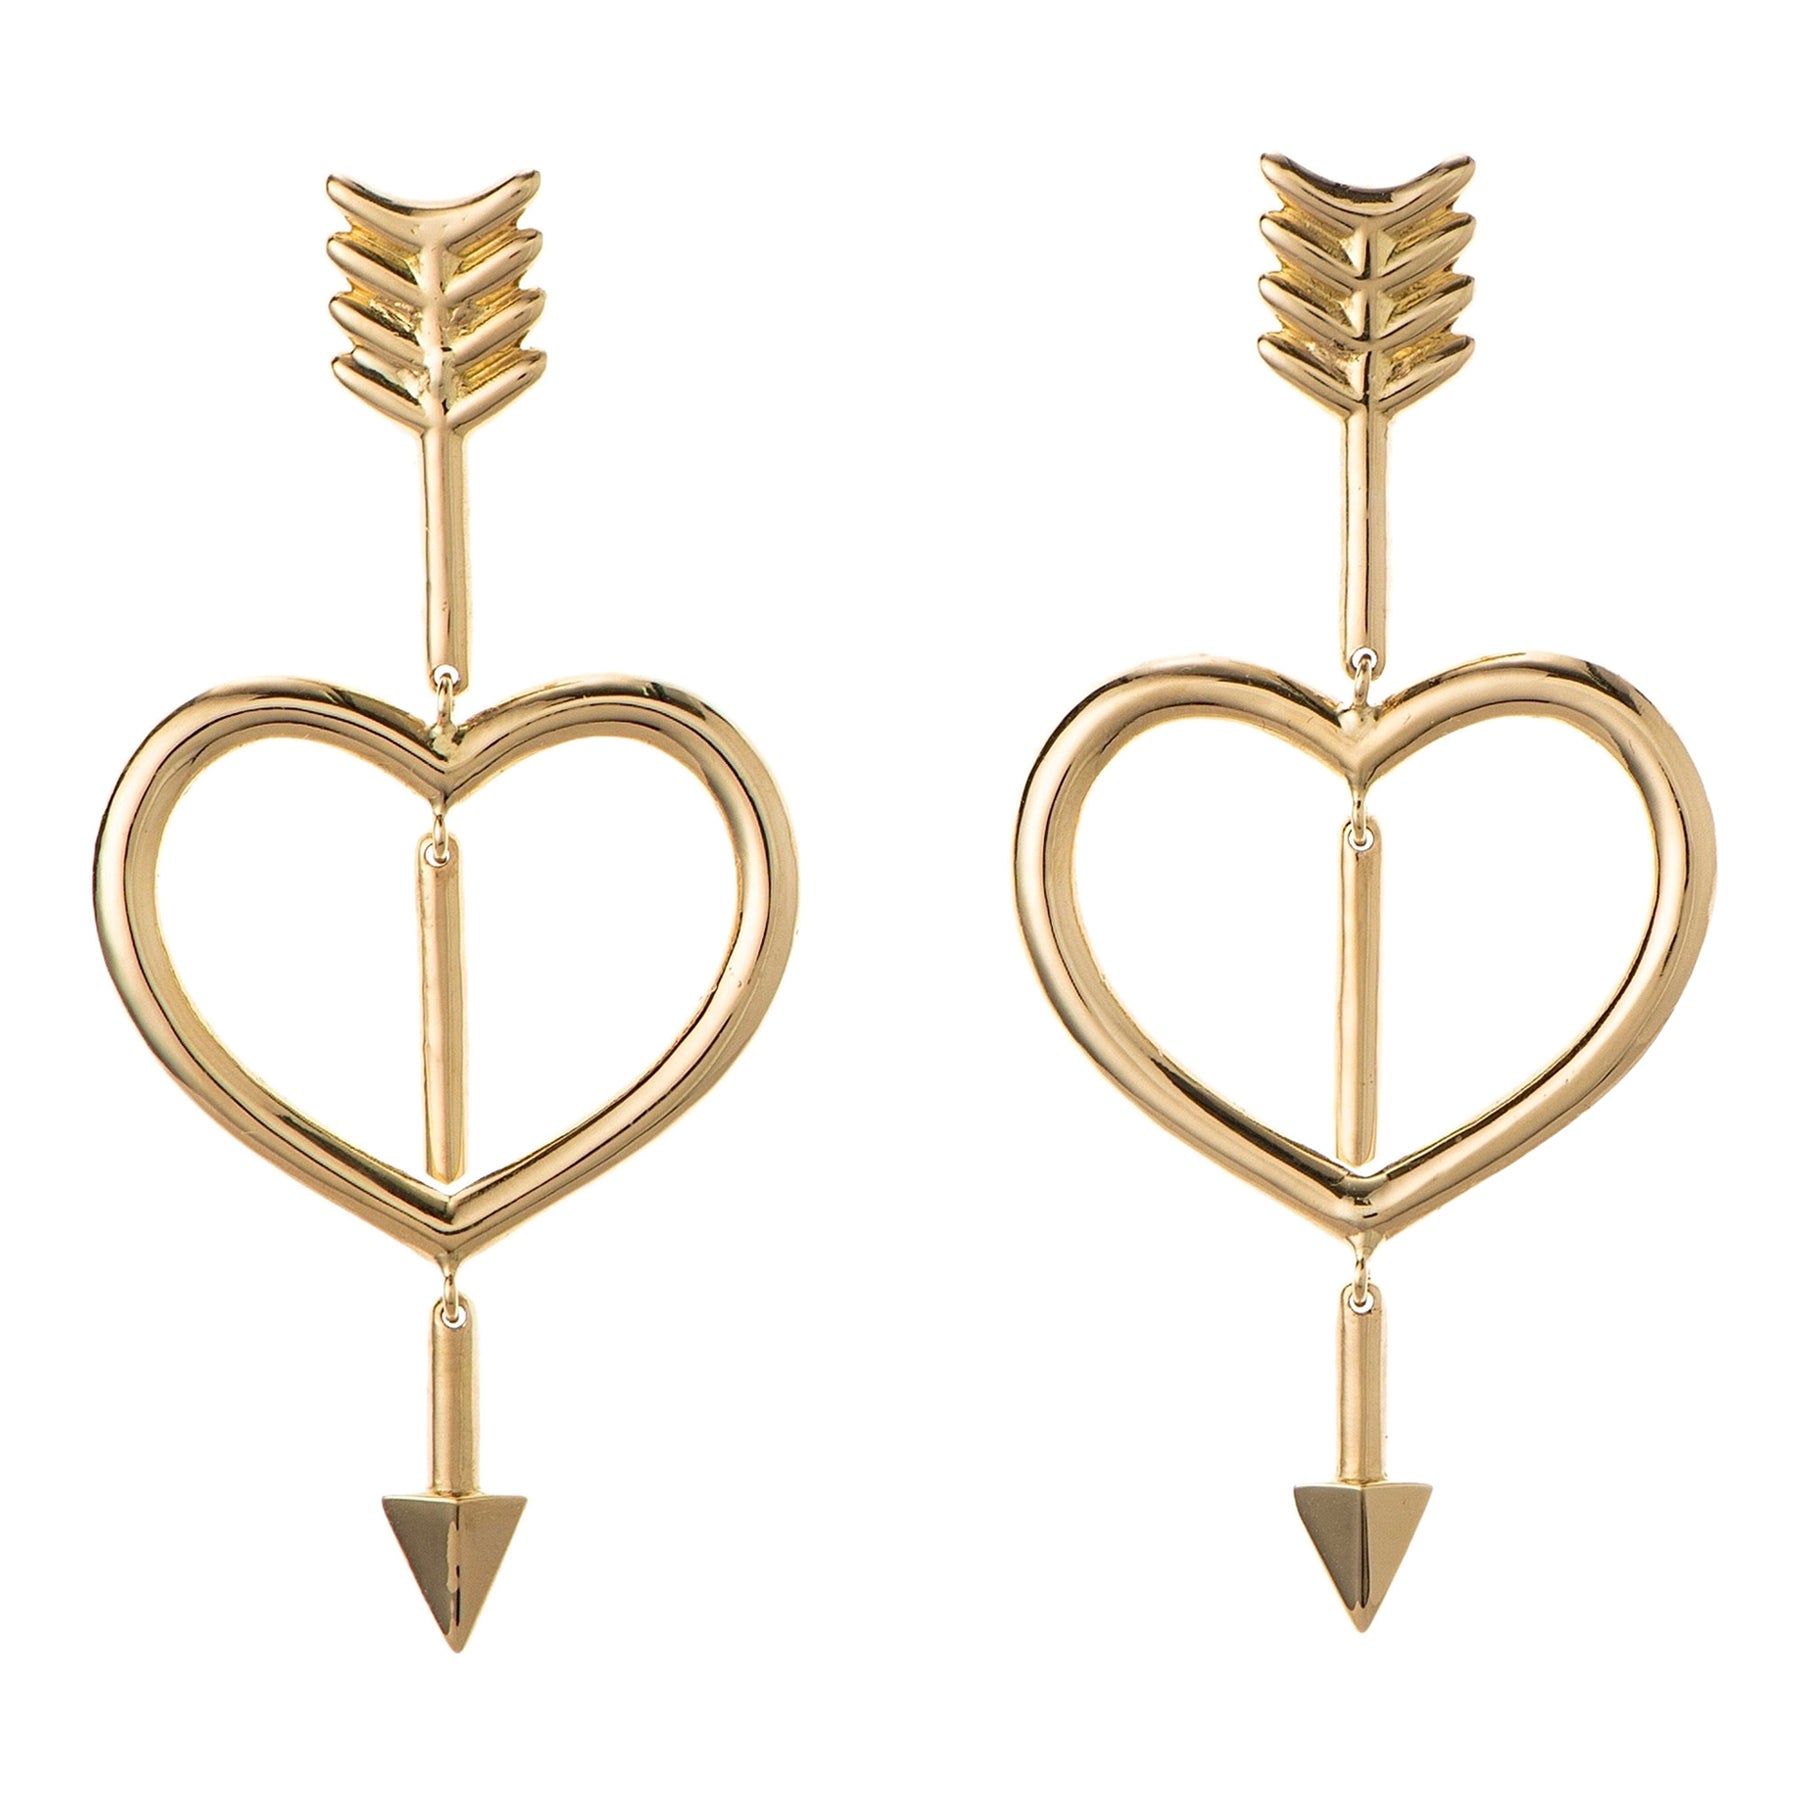 Maria Kotsoni- Contemporary Articulated 18K Yellow Gold Heart & Arrow Earrings